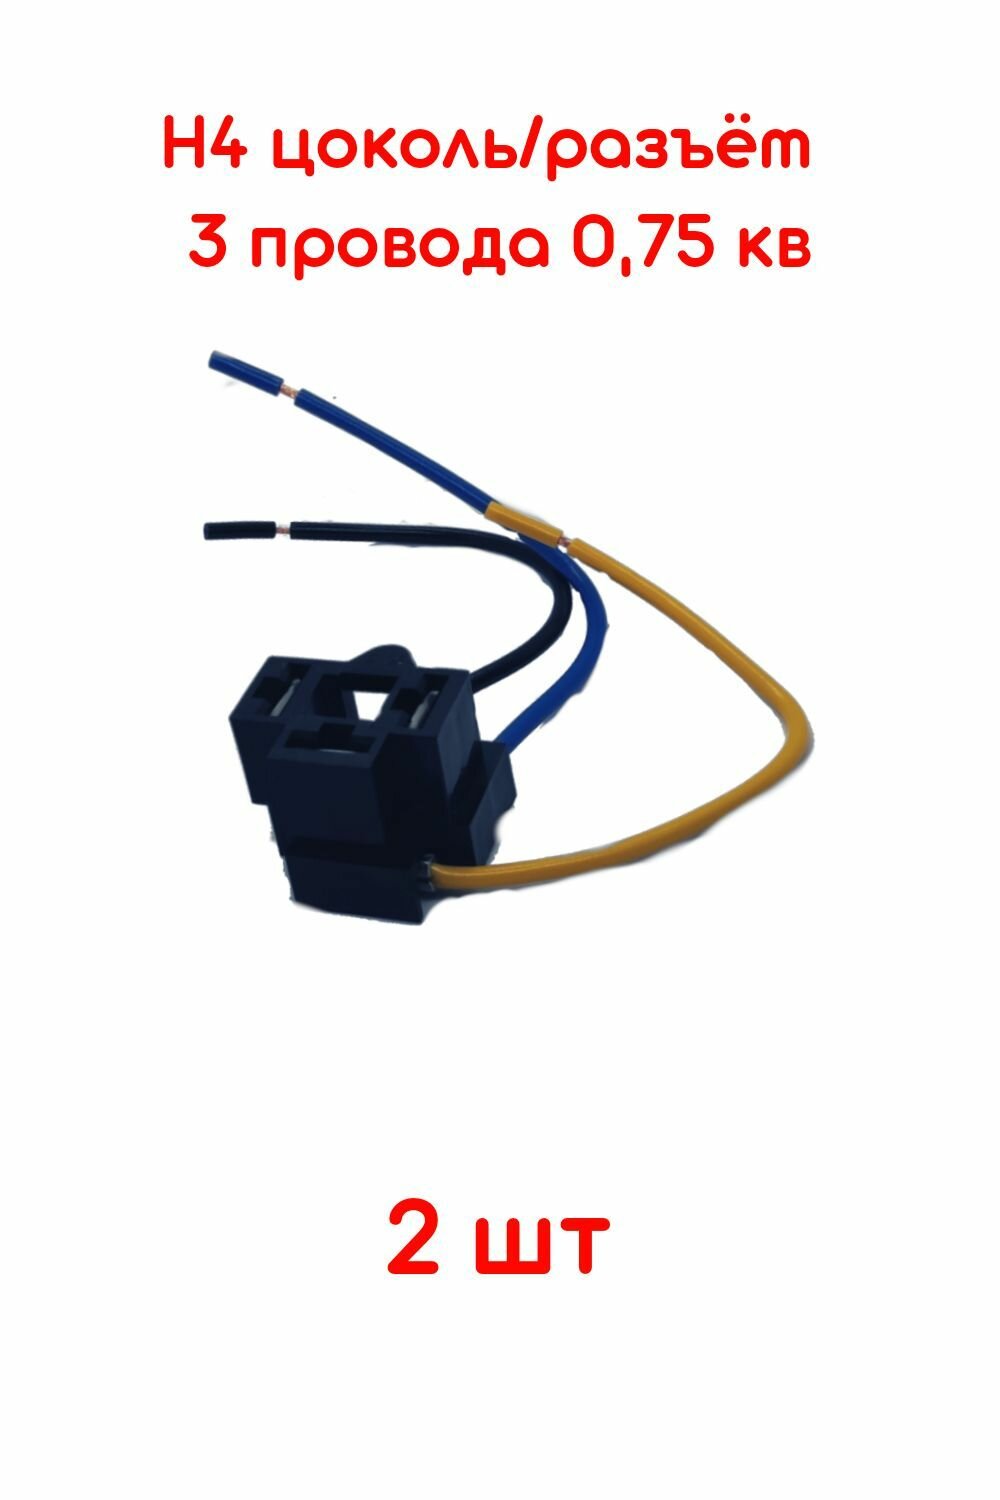 Н4 цоколь 3 провода - 2 штуки / разъем / колодка / фишка / патрон лампы фары/